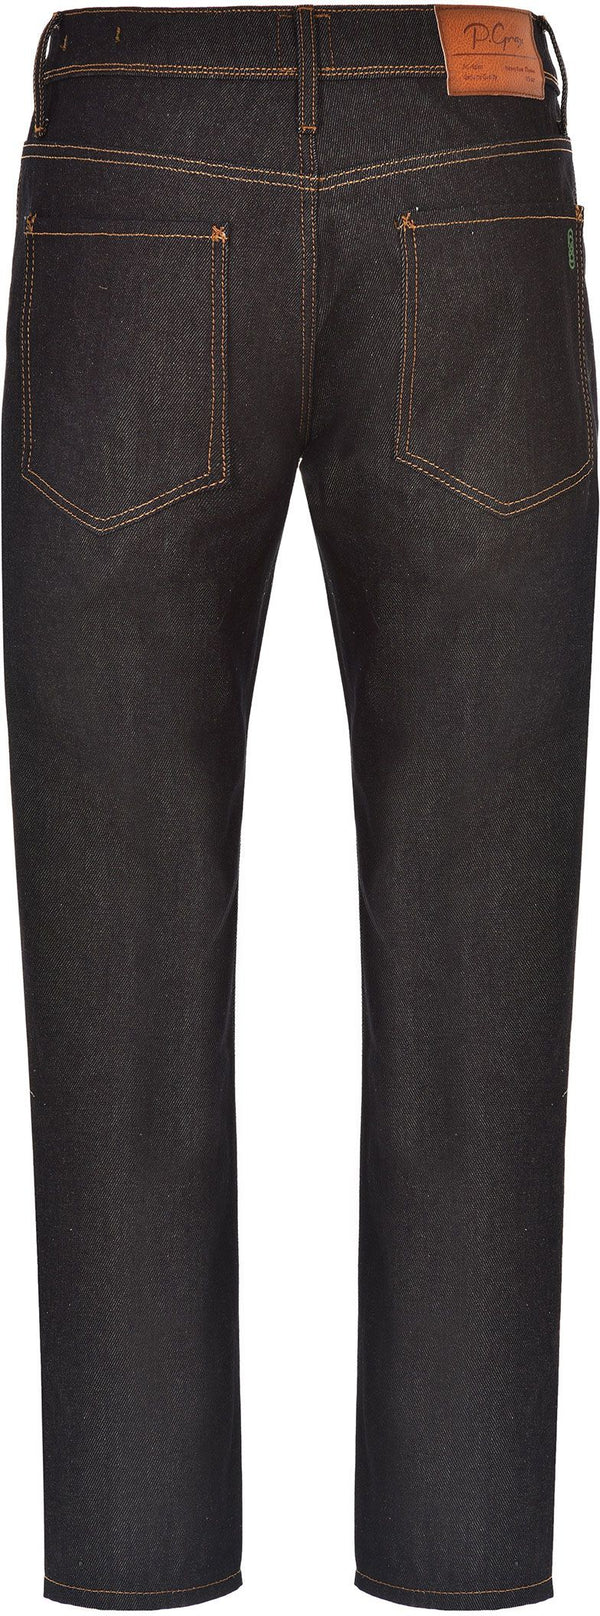 P.Grax pantaloni jeans Mender Rinsed Normal Fit dark blue